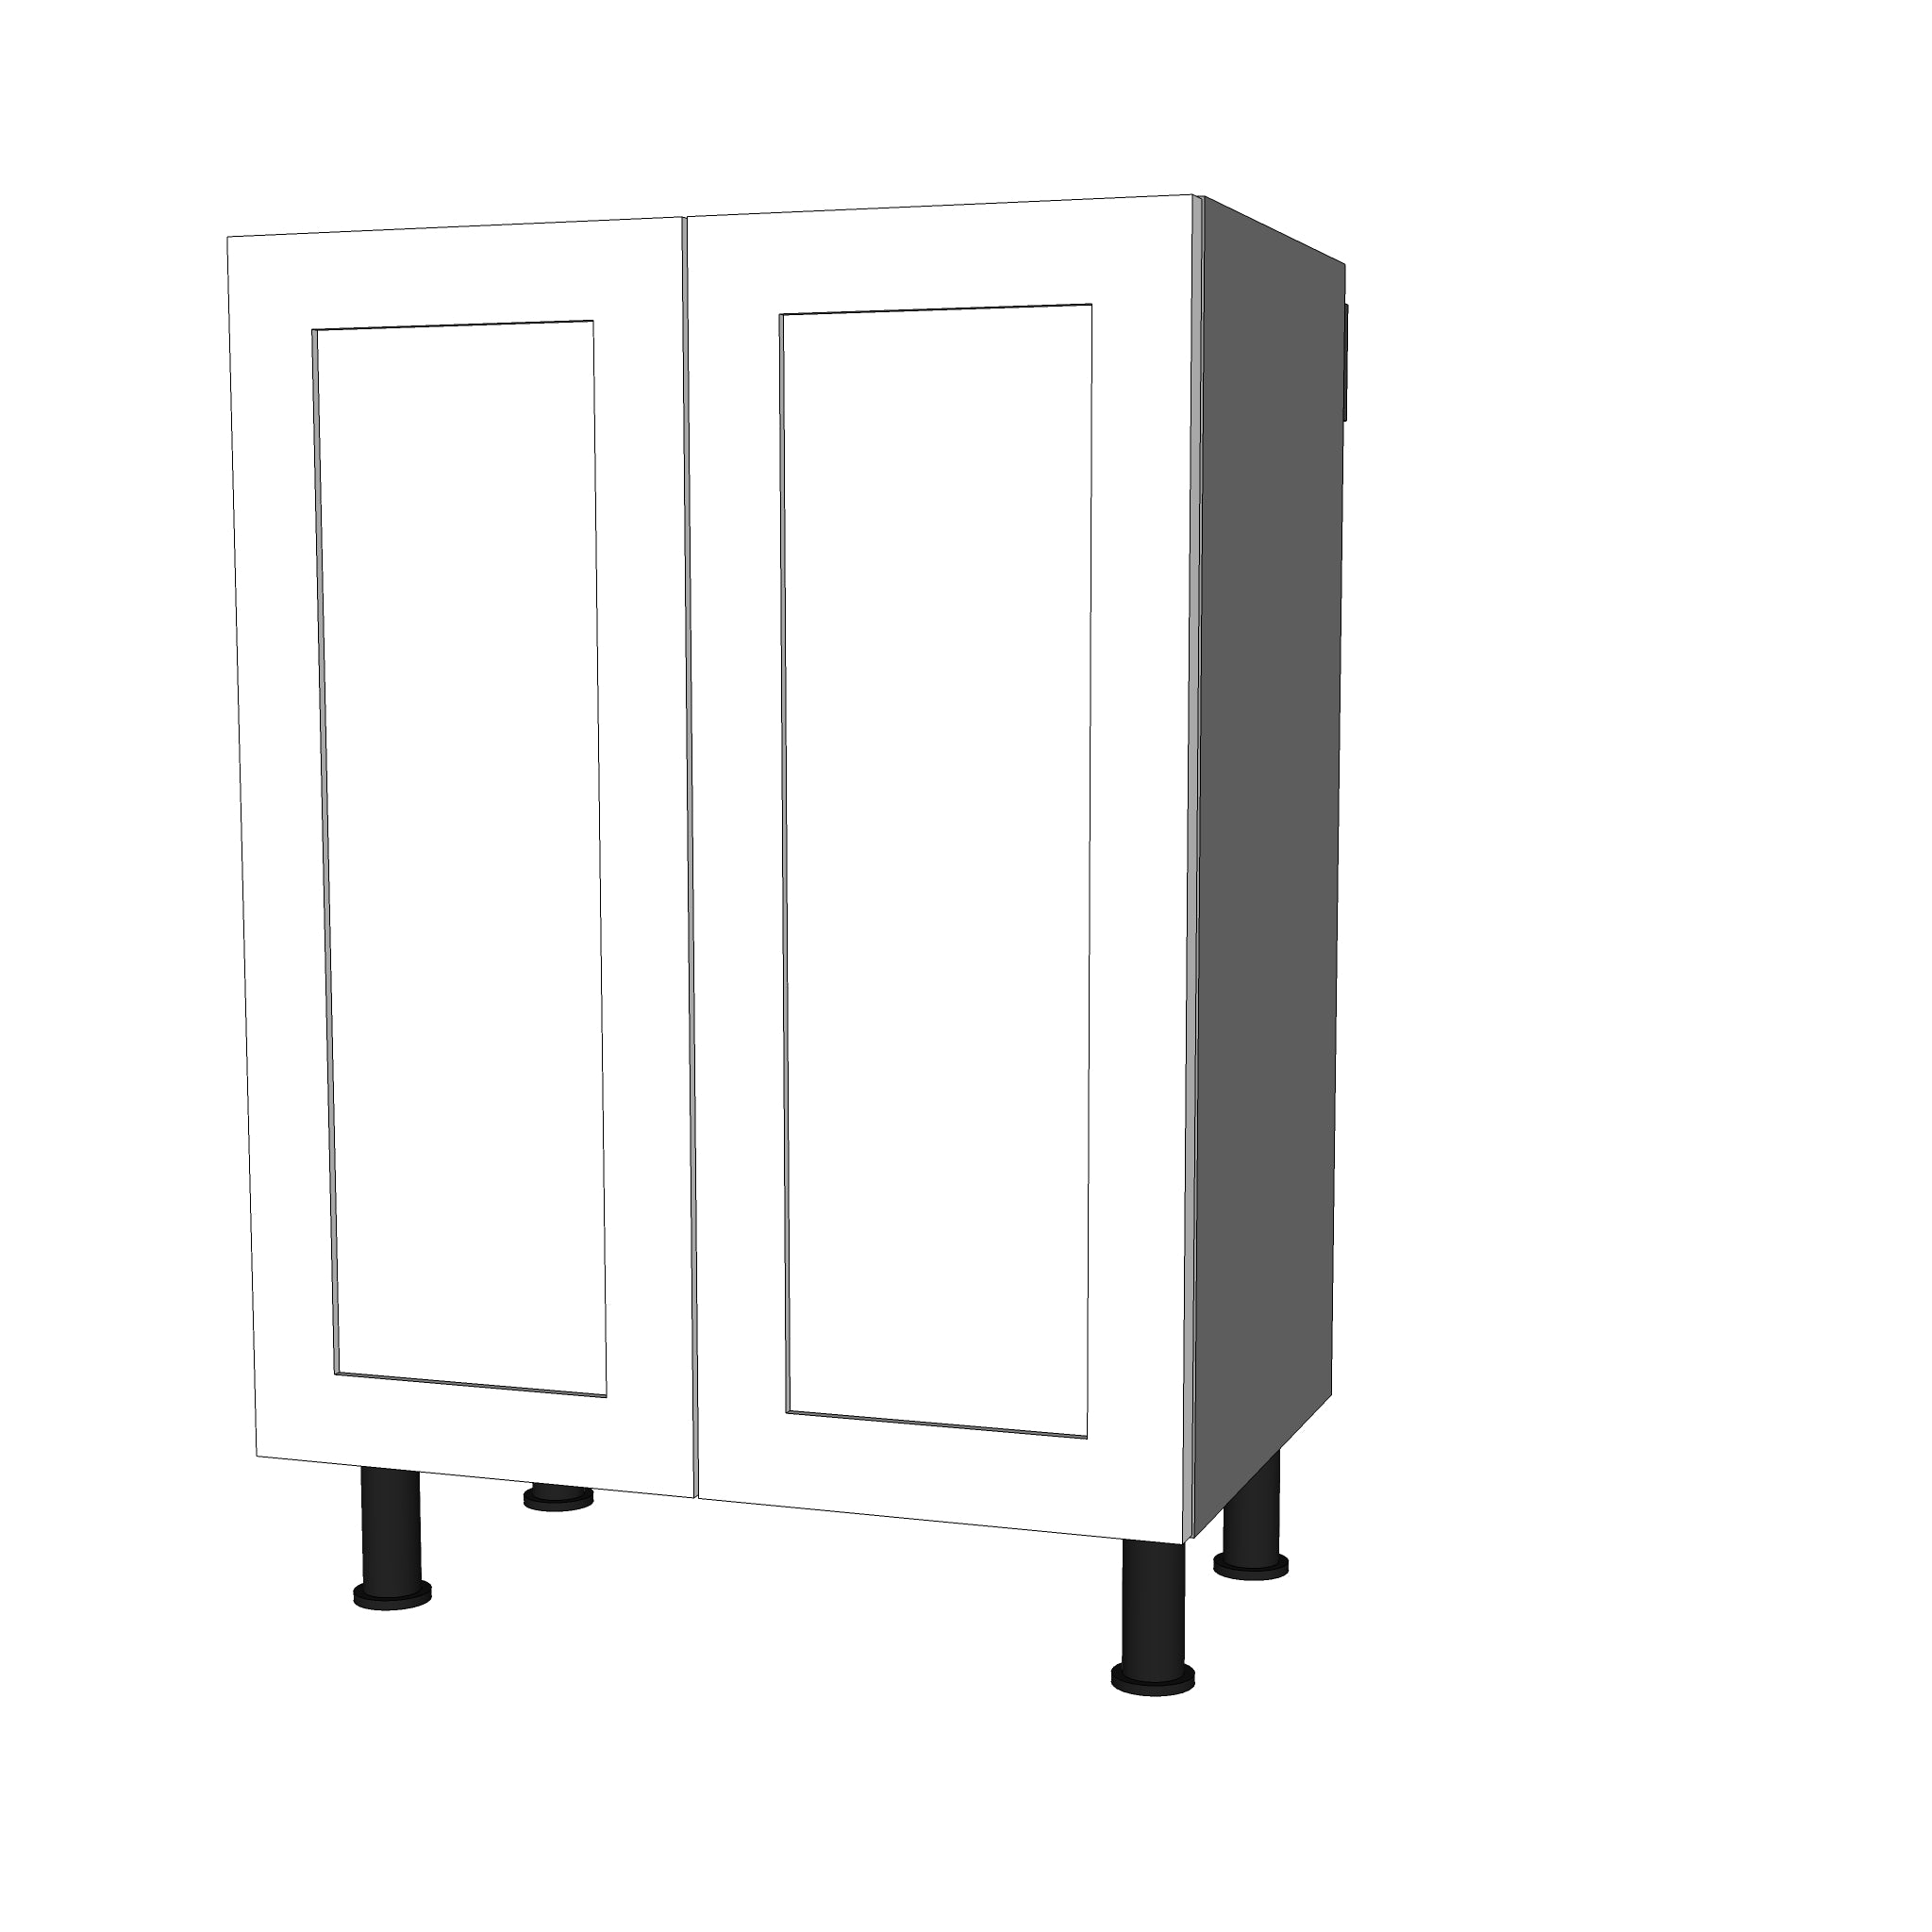 B2d 30 Two 15 Wide Doors For 30 W Ikea Sektion Base Cabinet